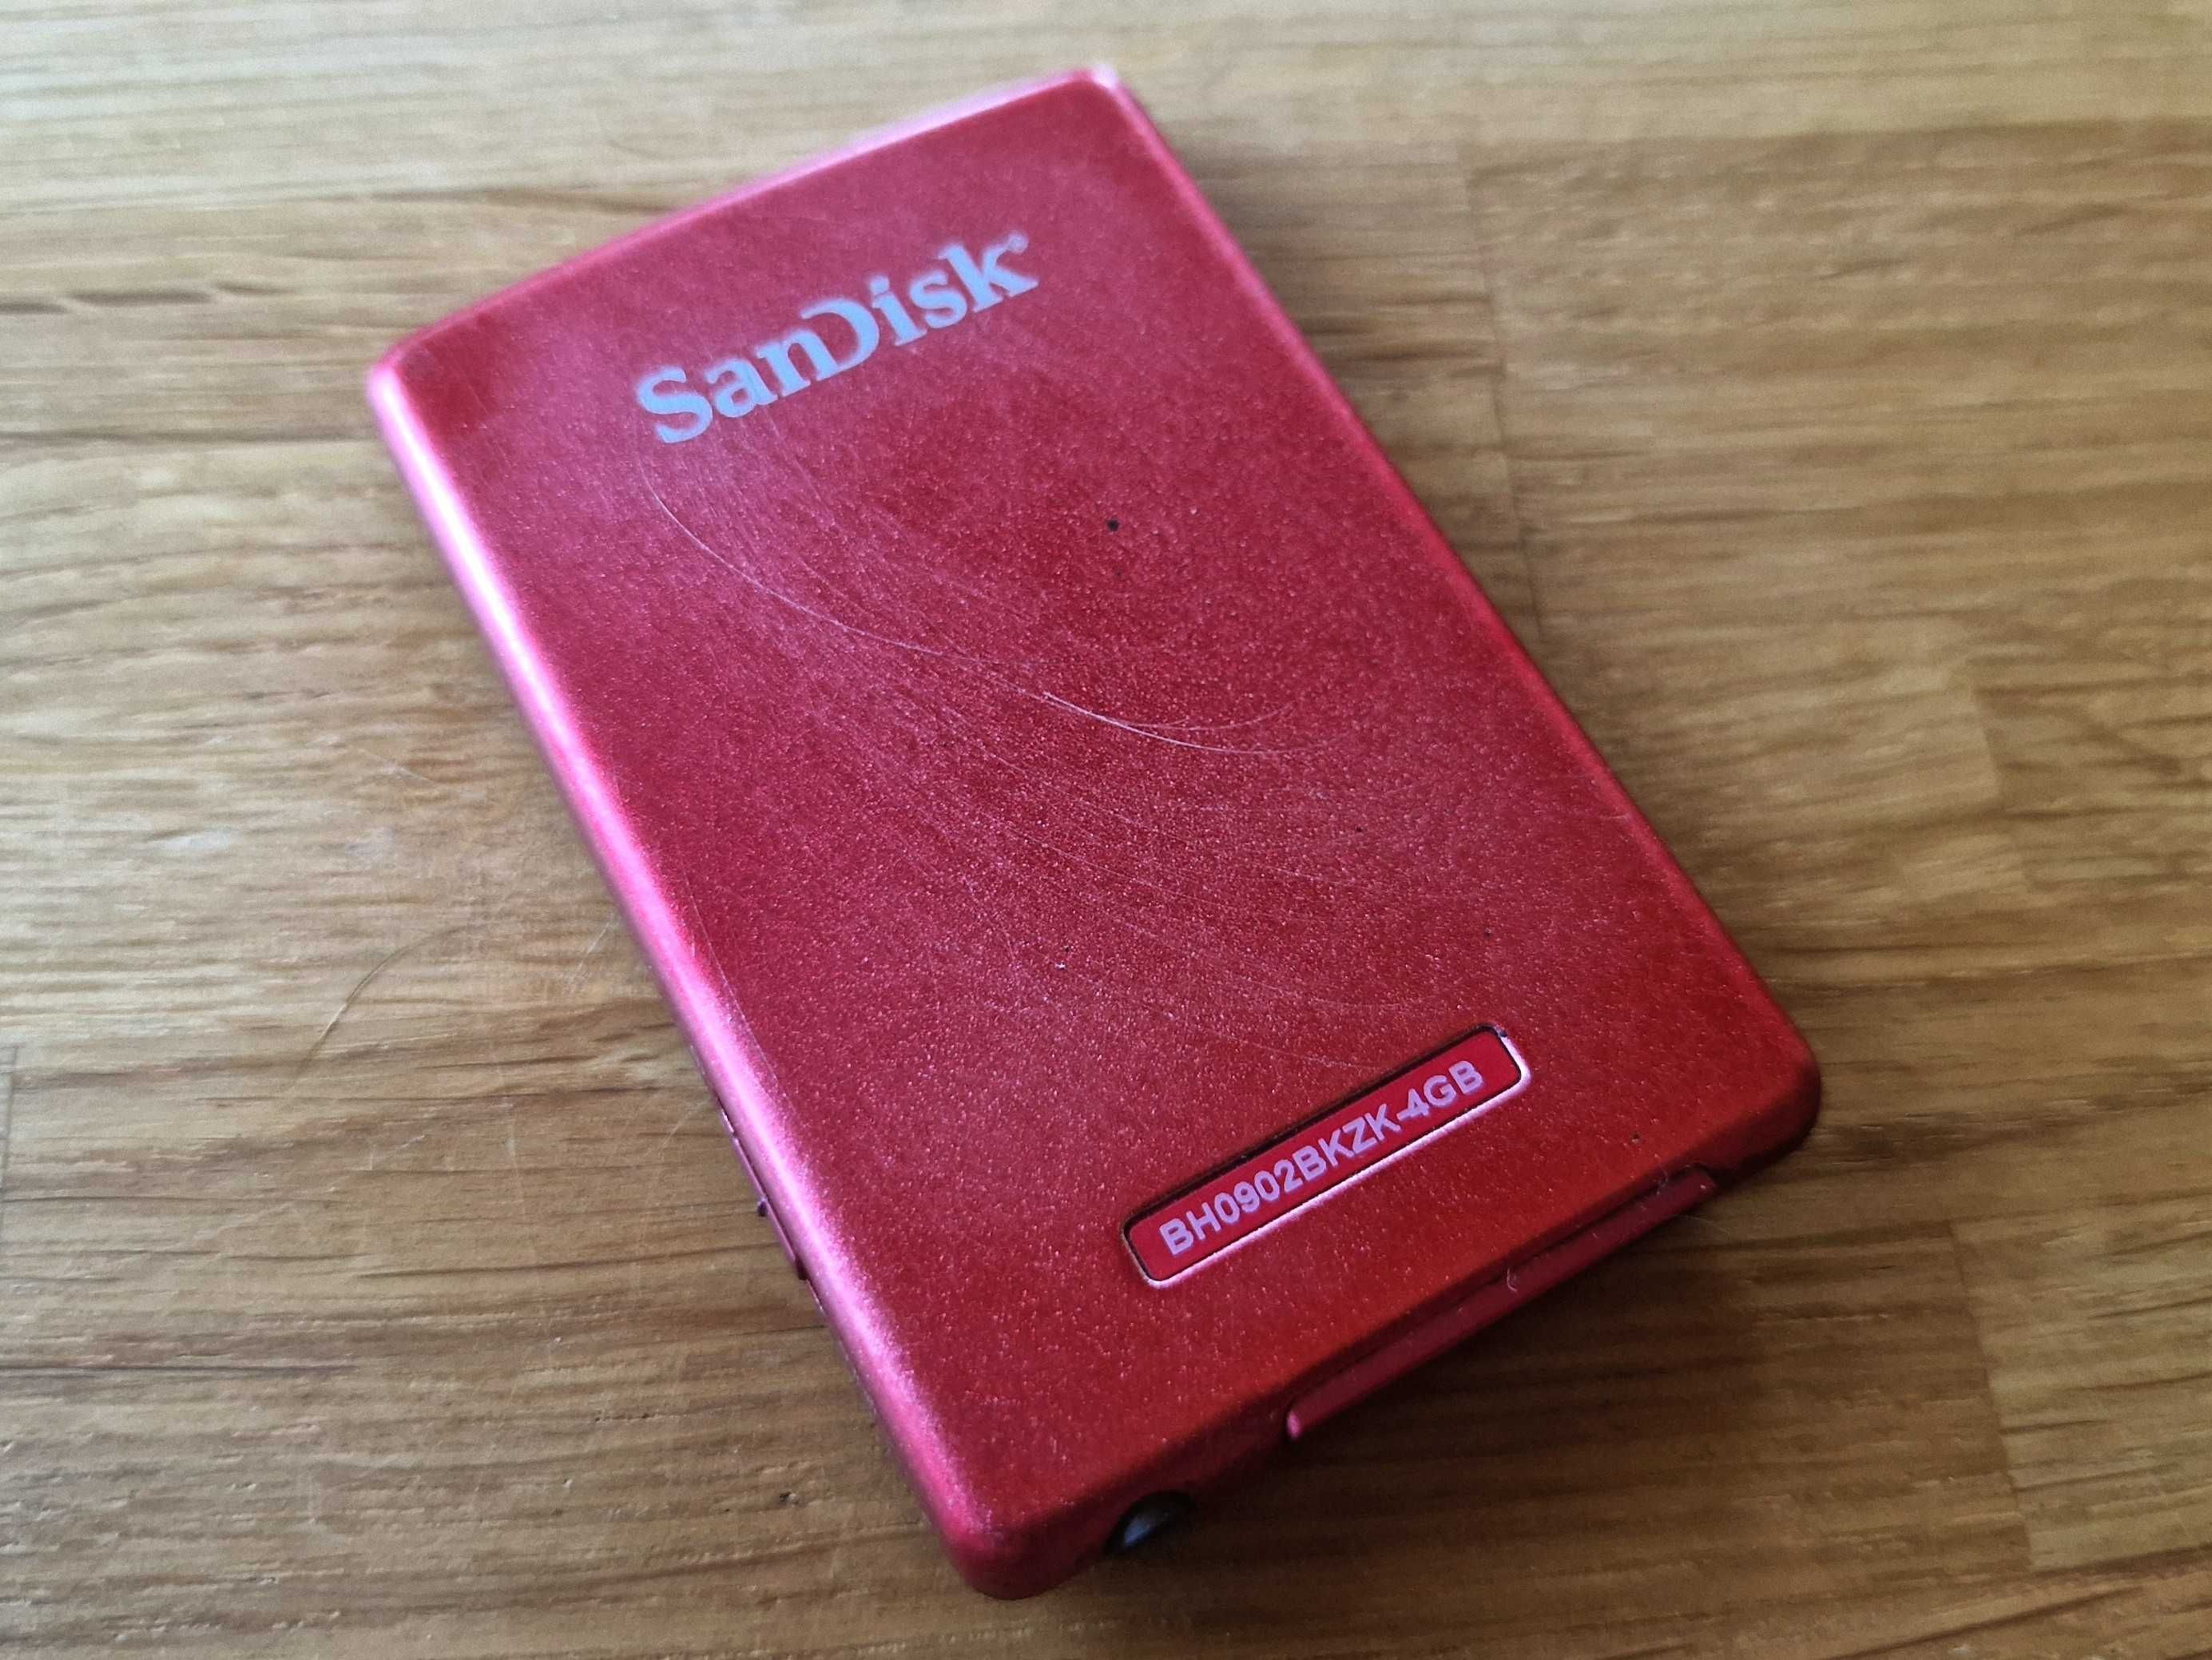 Sandisk Sansa Fuze (BH0902BKZK) 4GB